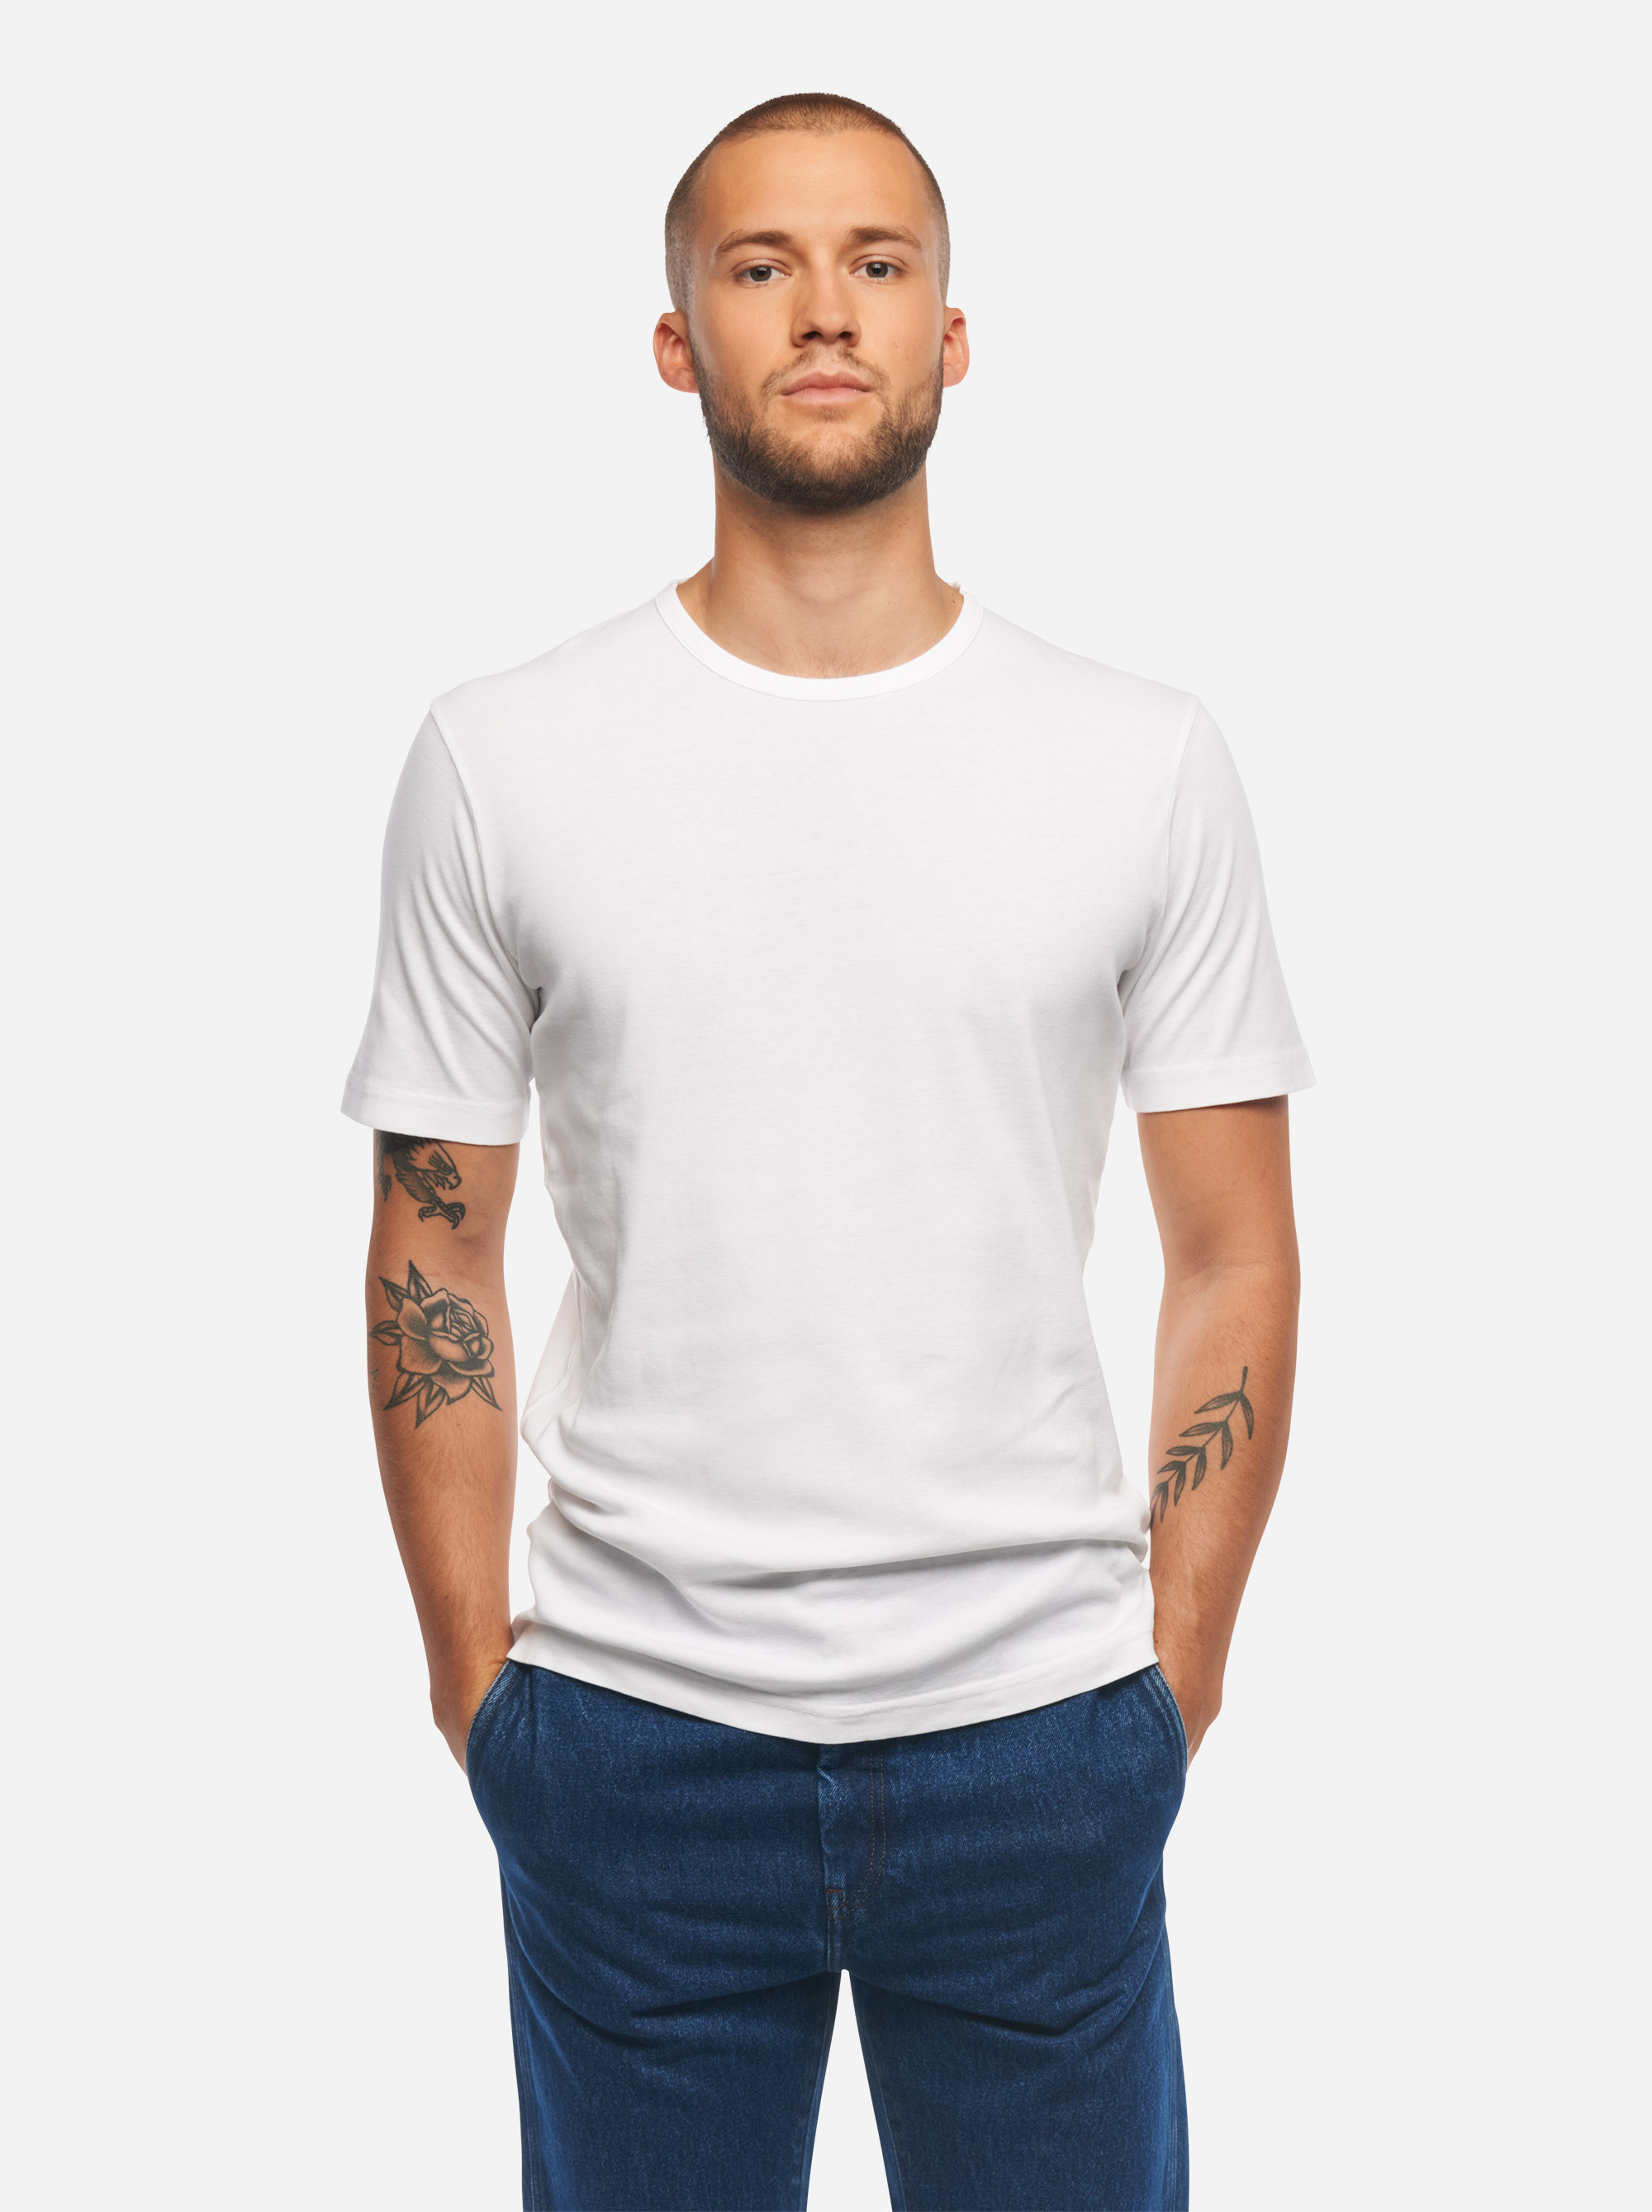 Teym - The T-Shirt - Men - White - 1